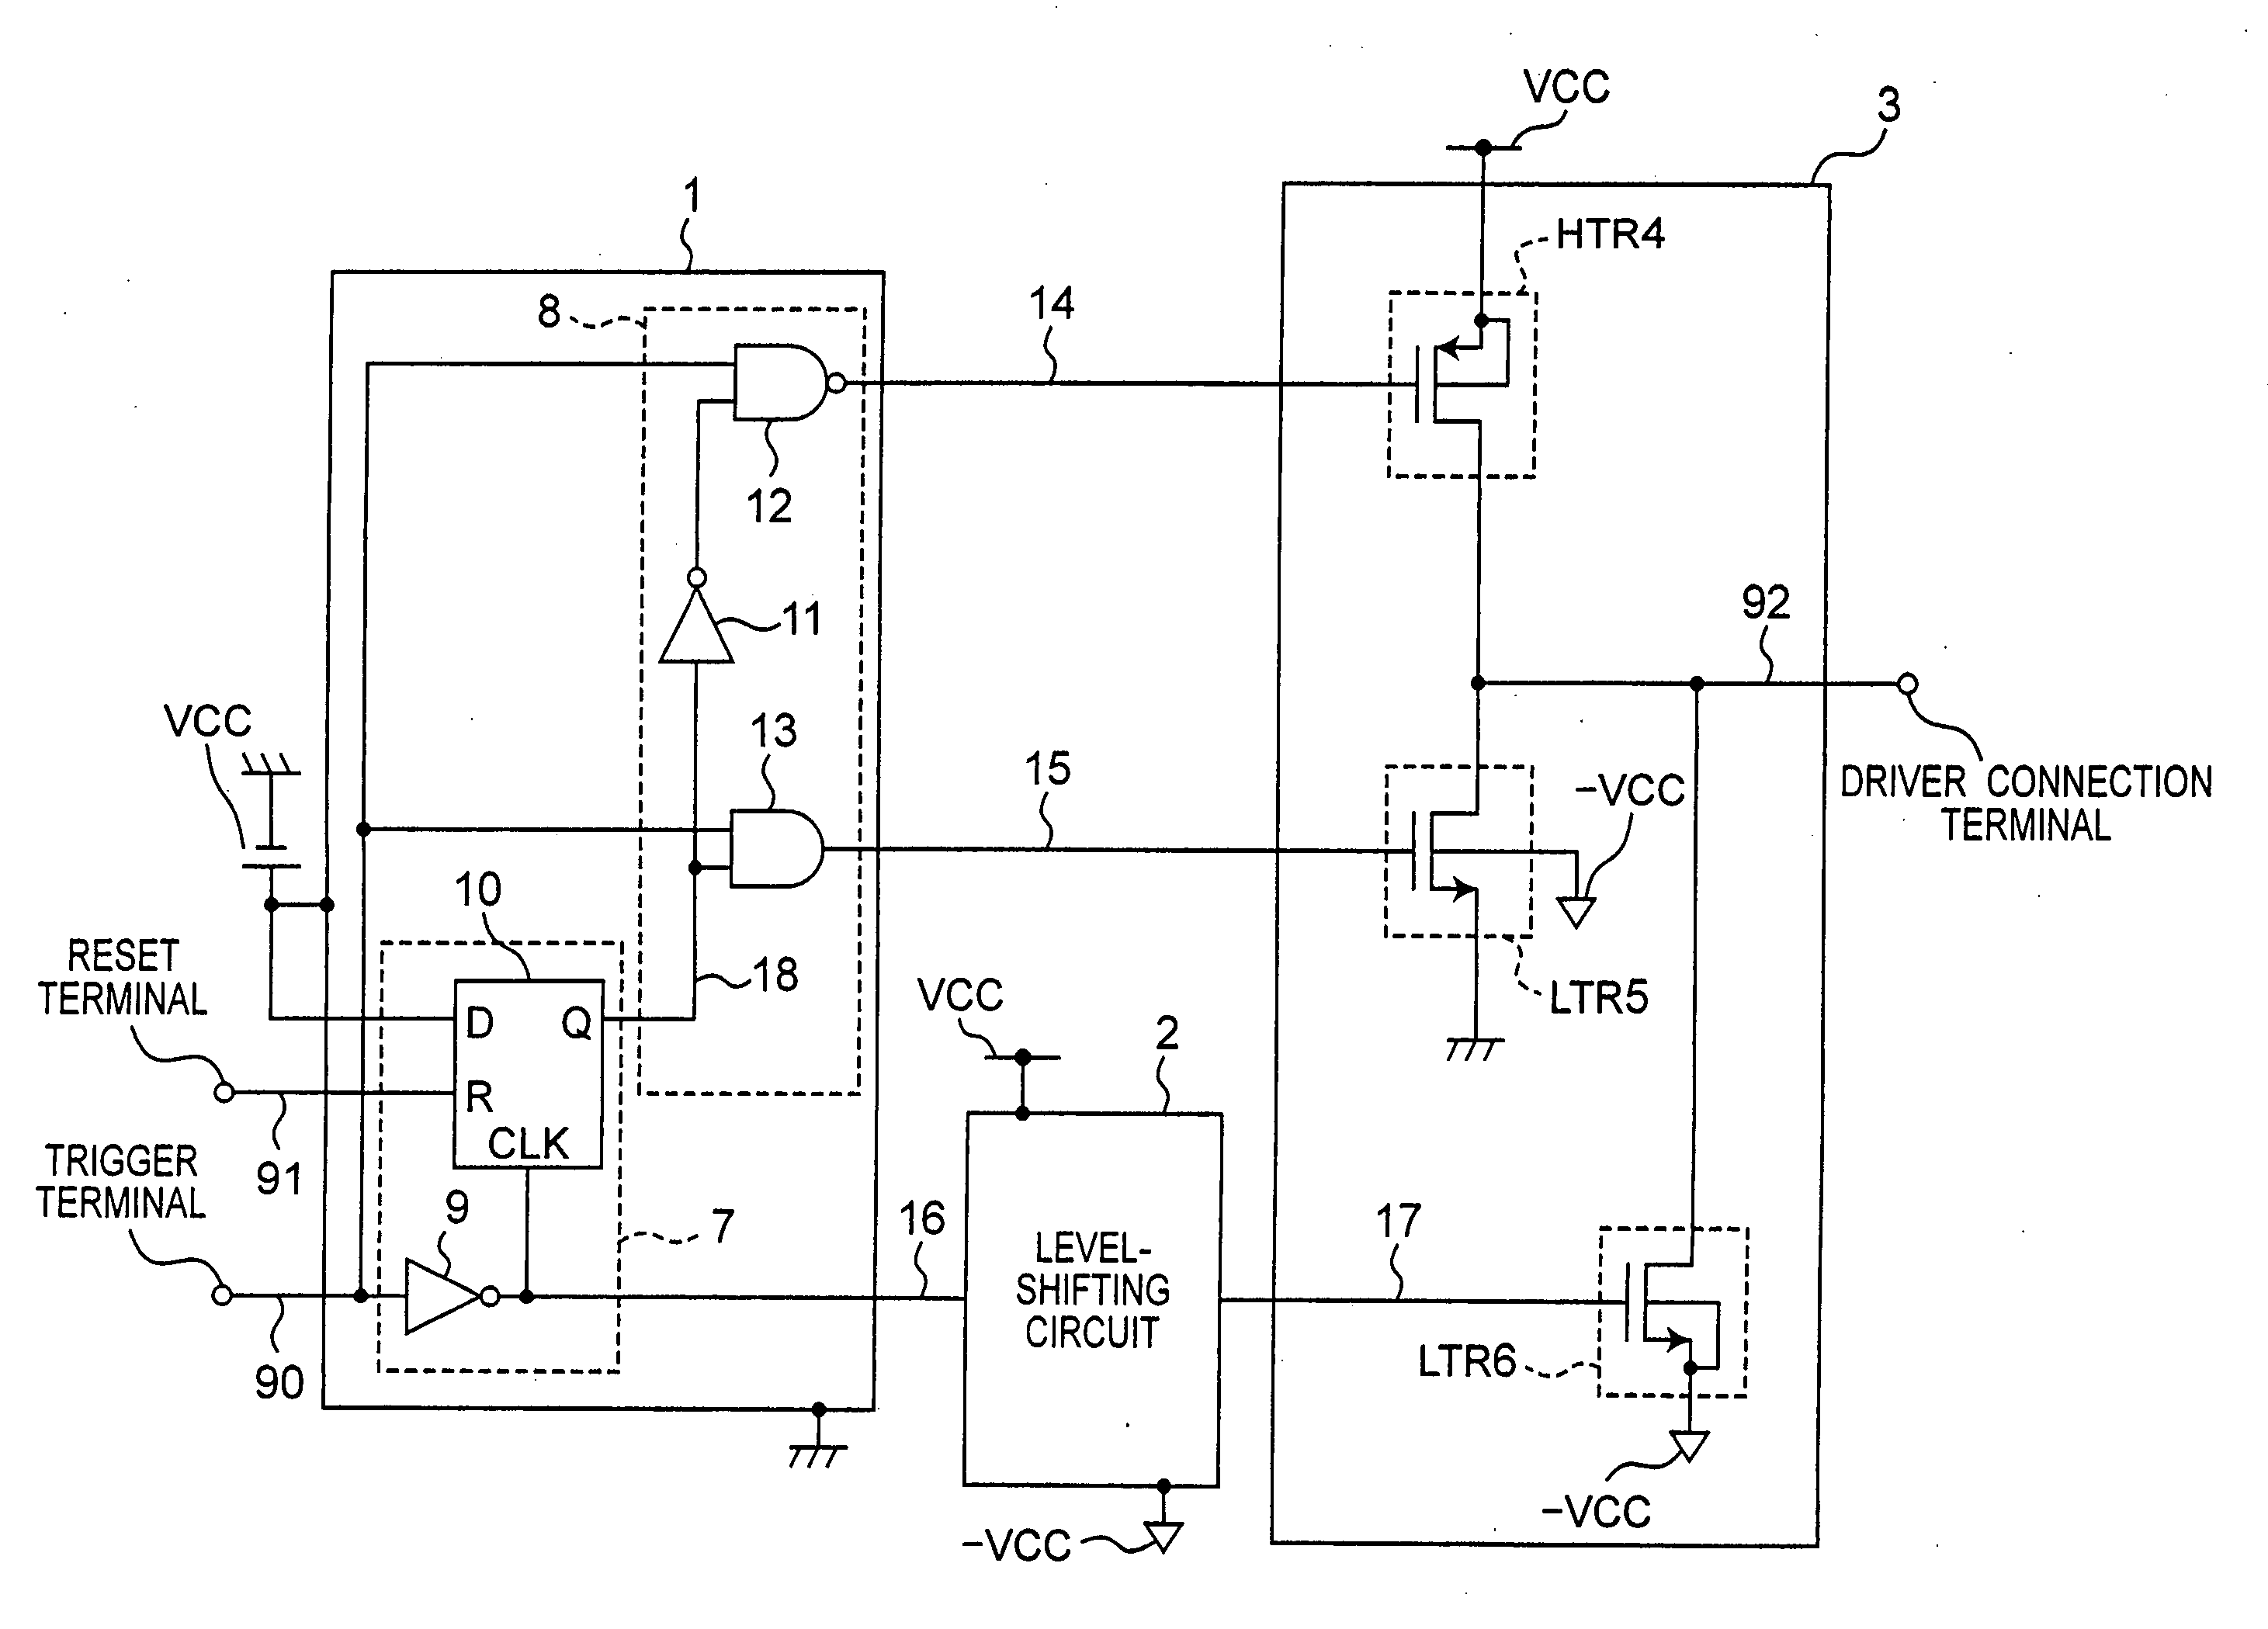 Circuit for generating ternary signal